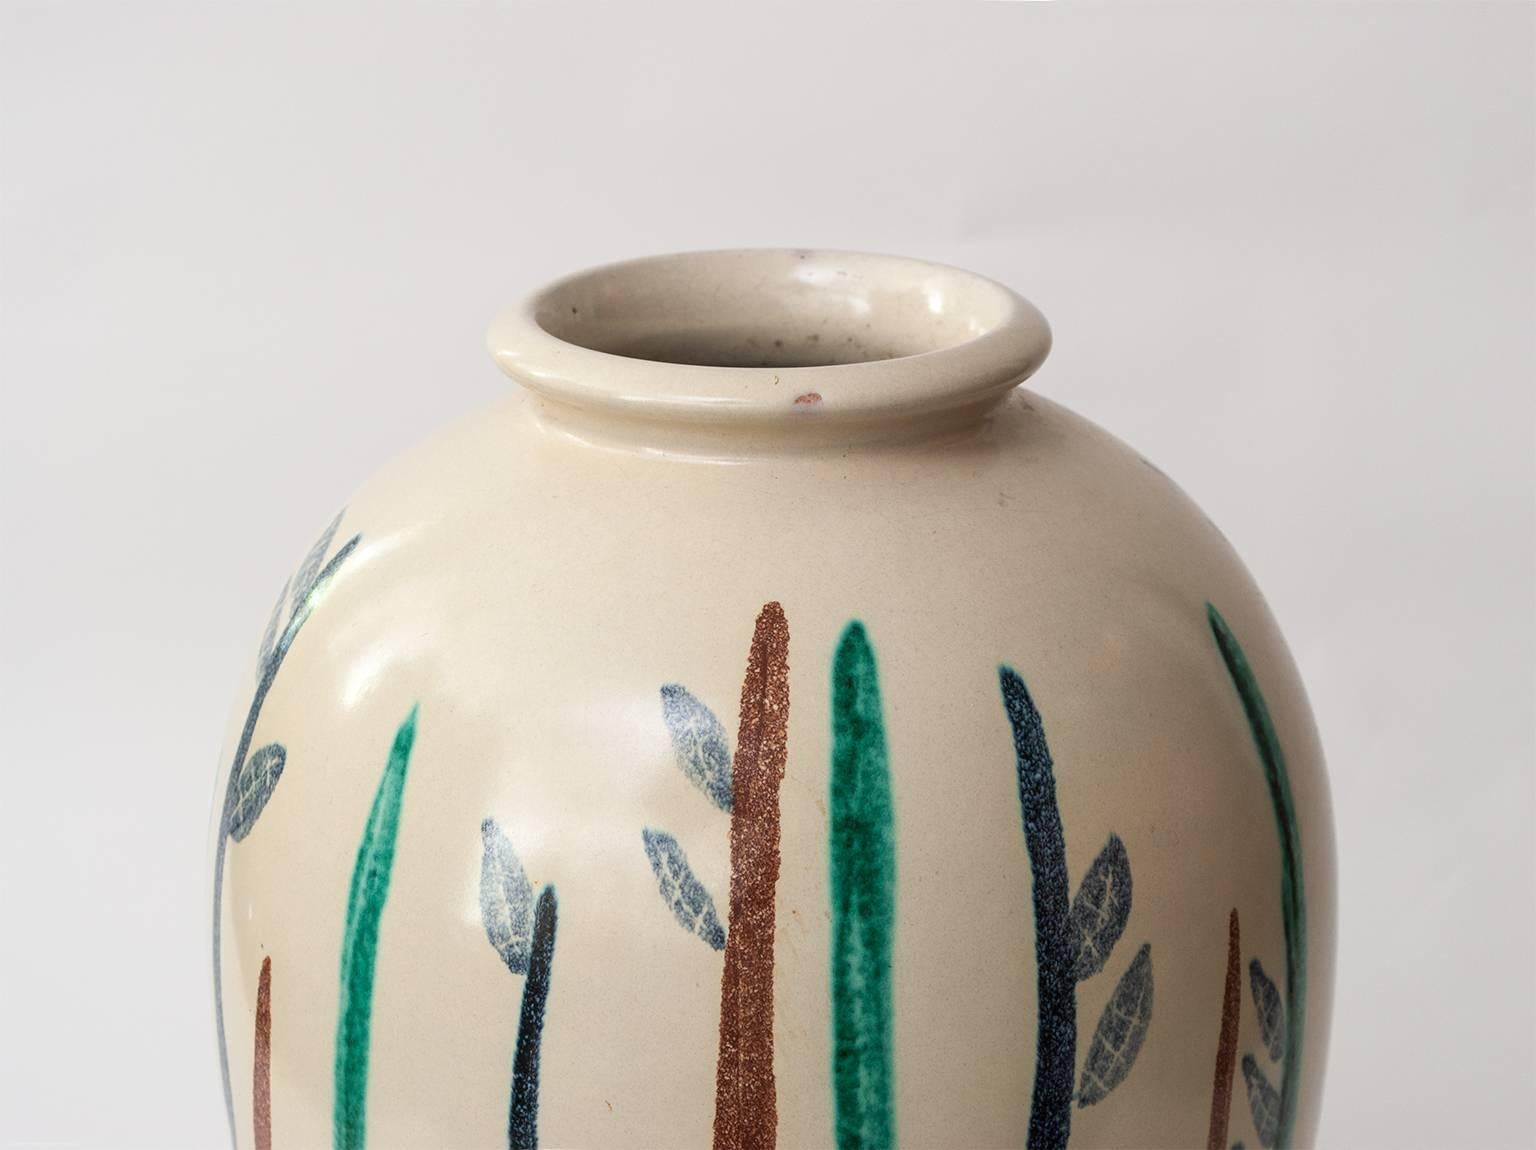 Glazed Large Scandinavian Modern Studio Vase with Hand-Painted Design by Mette Doller